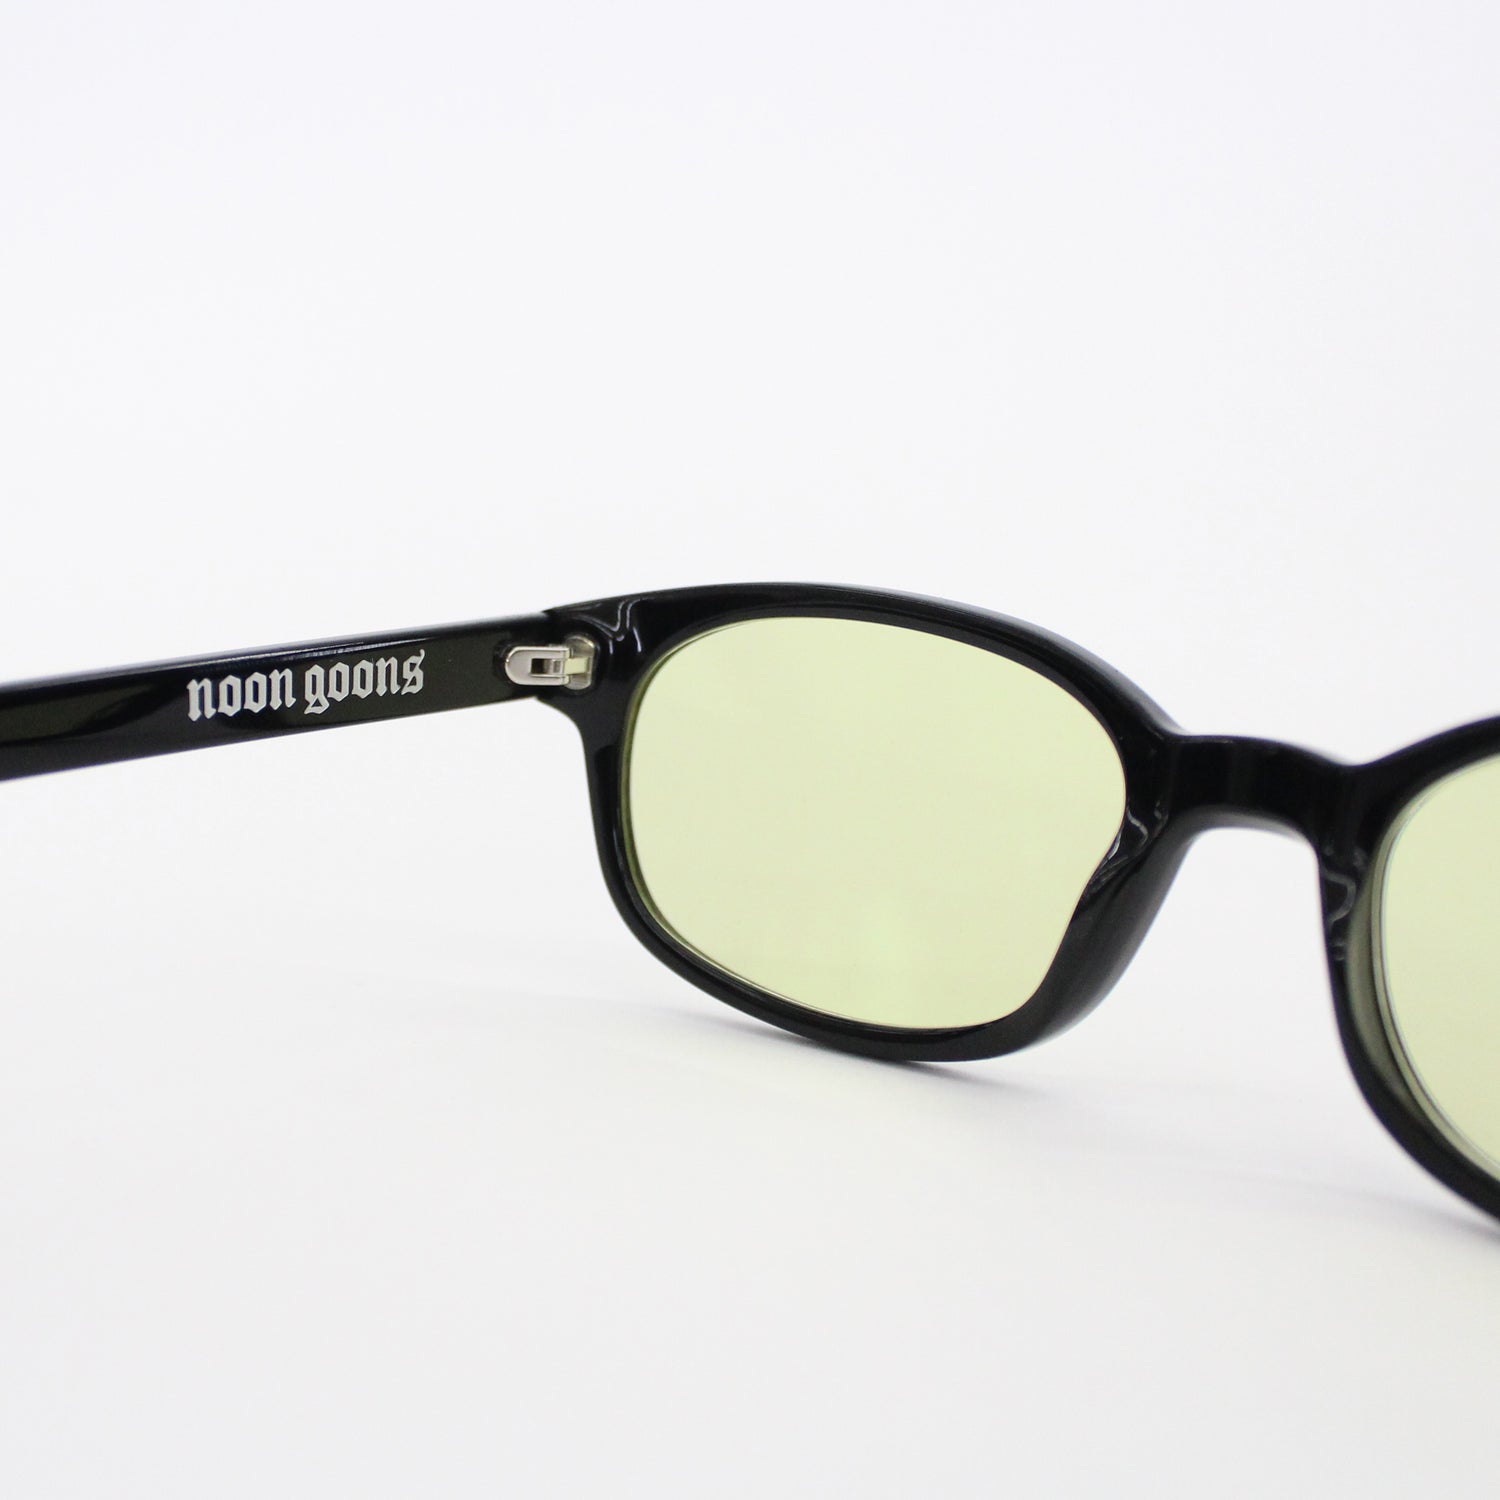 Unibase Glasses - Green